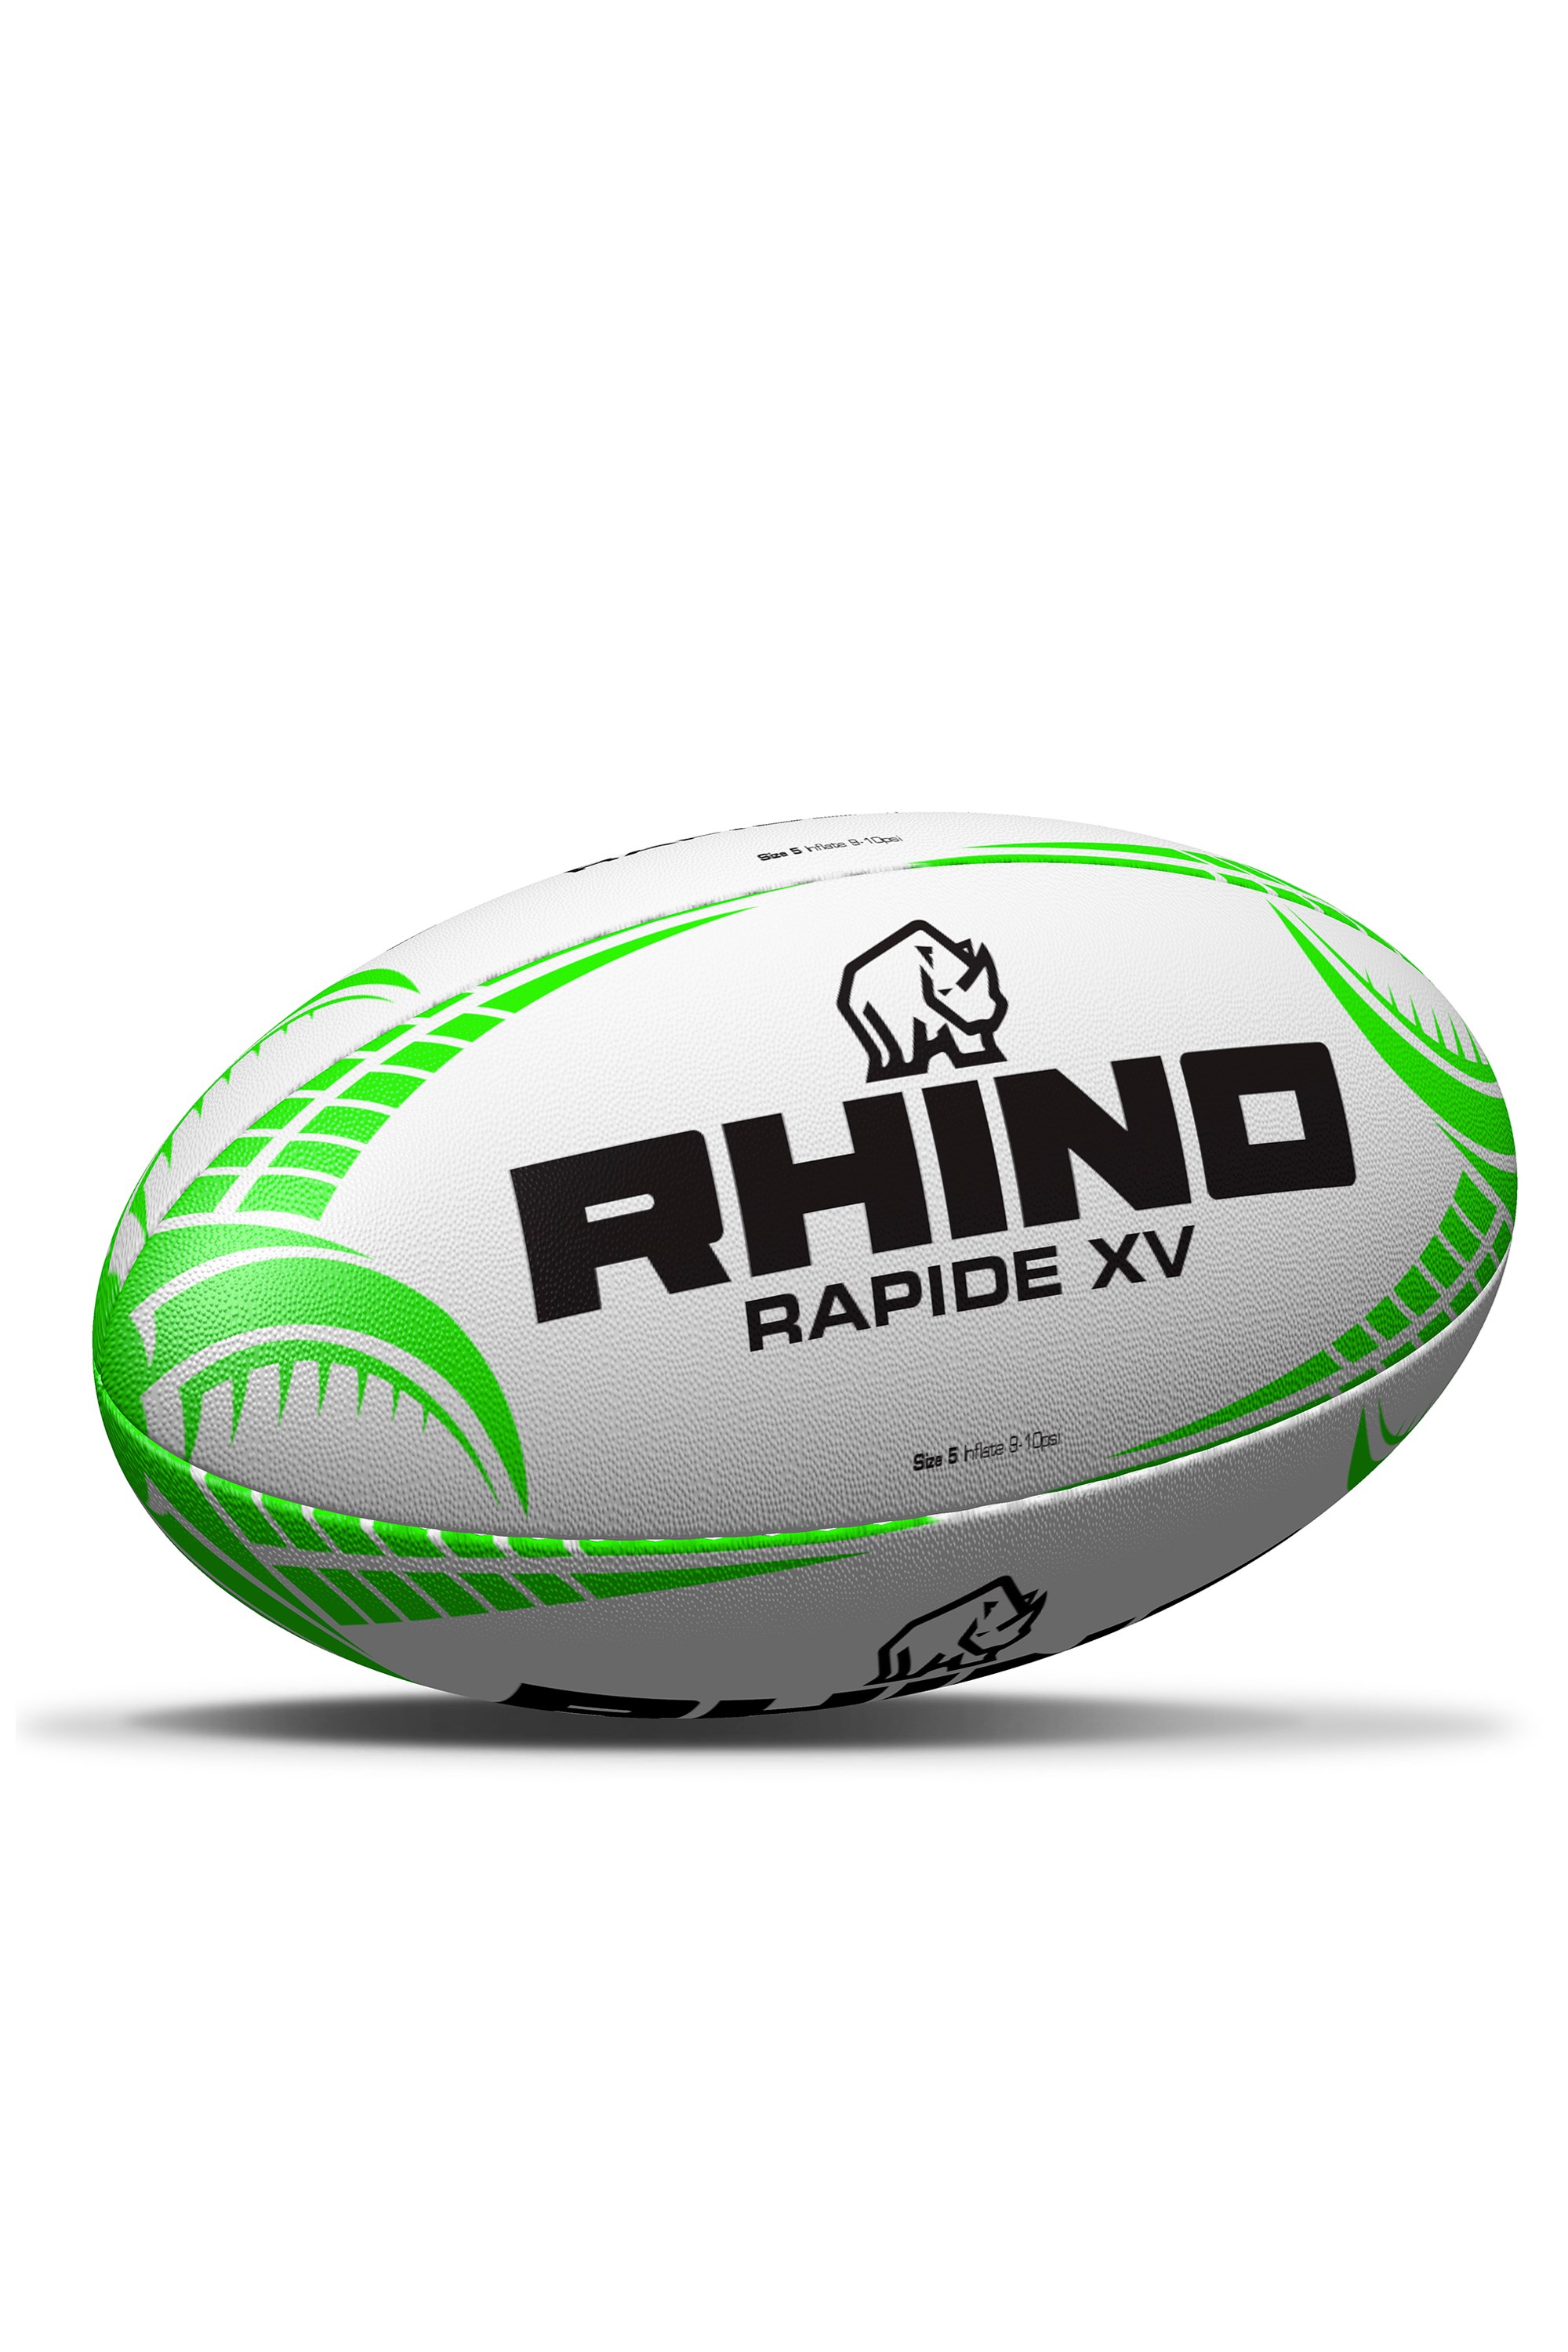 Rhino Rapide Xv Rugby Ball - One